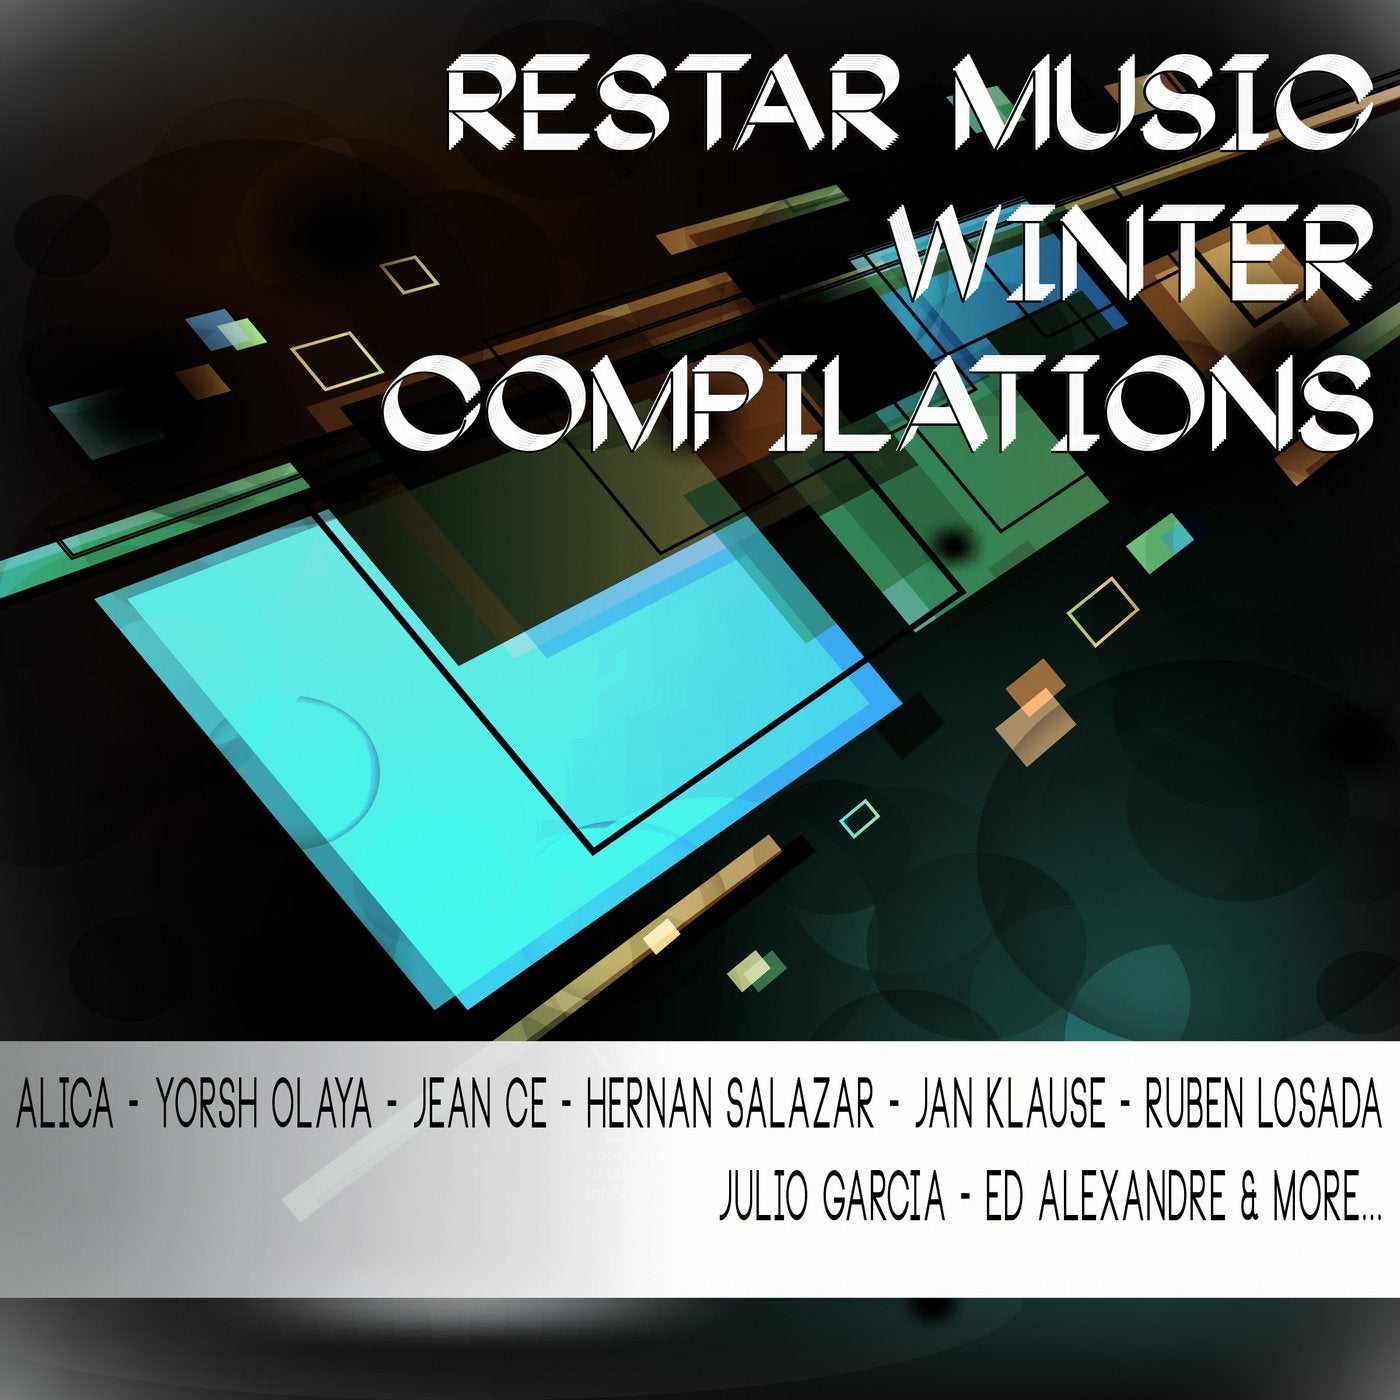 Restar Music Winter Compilations